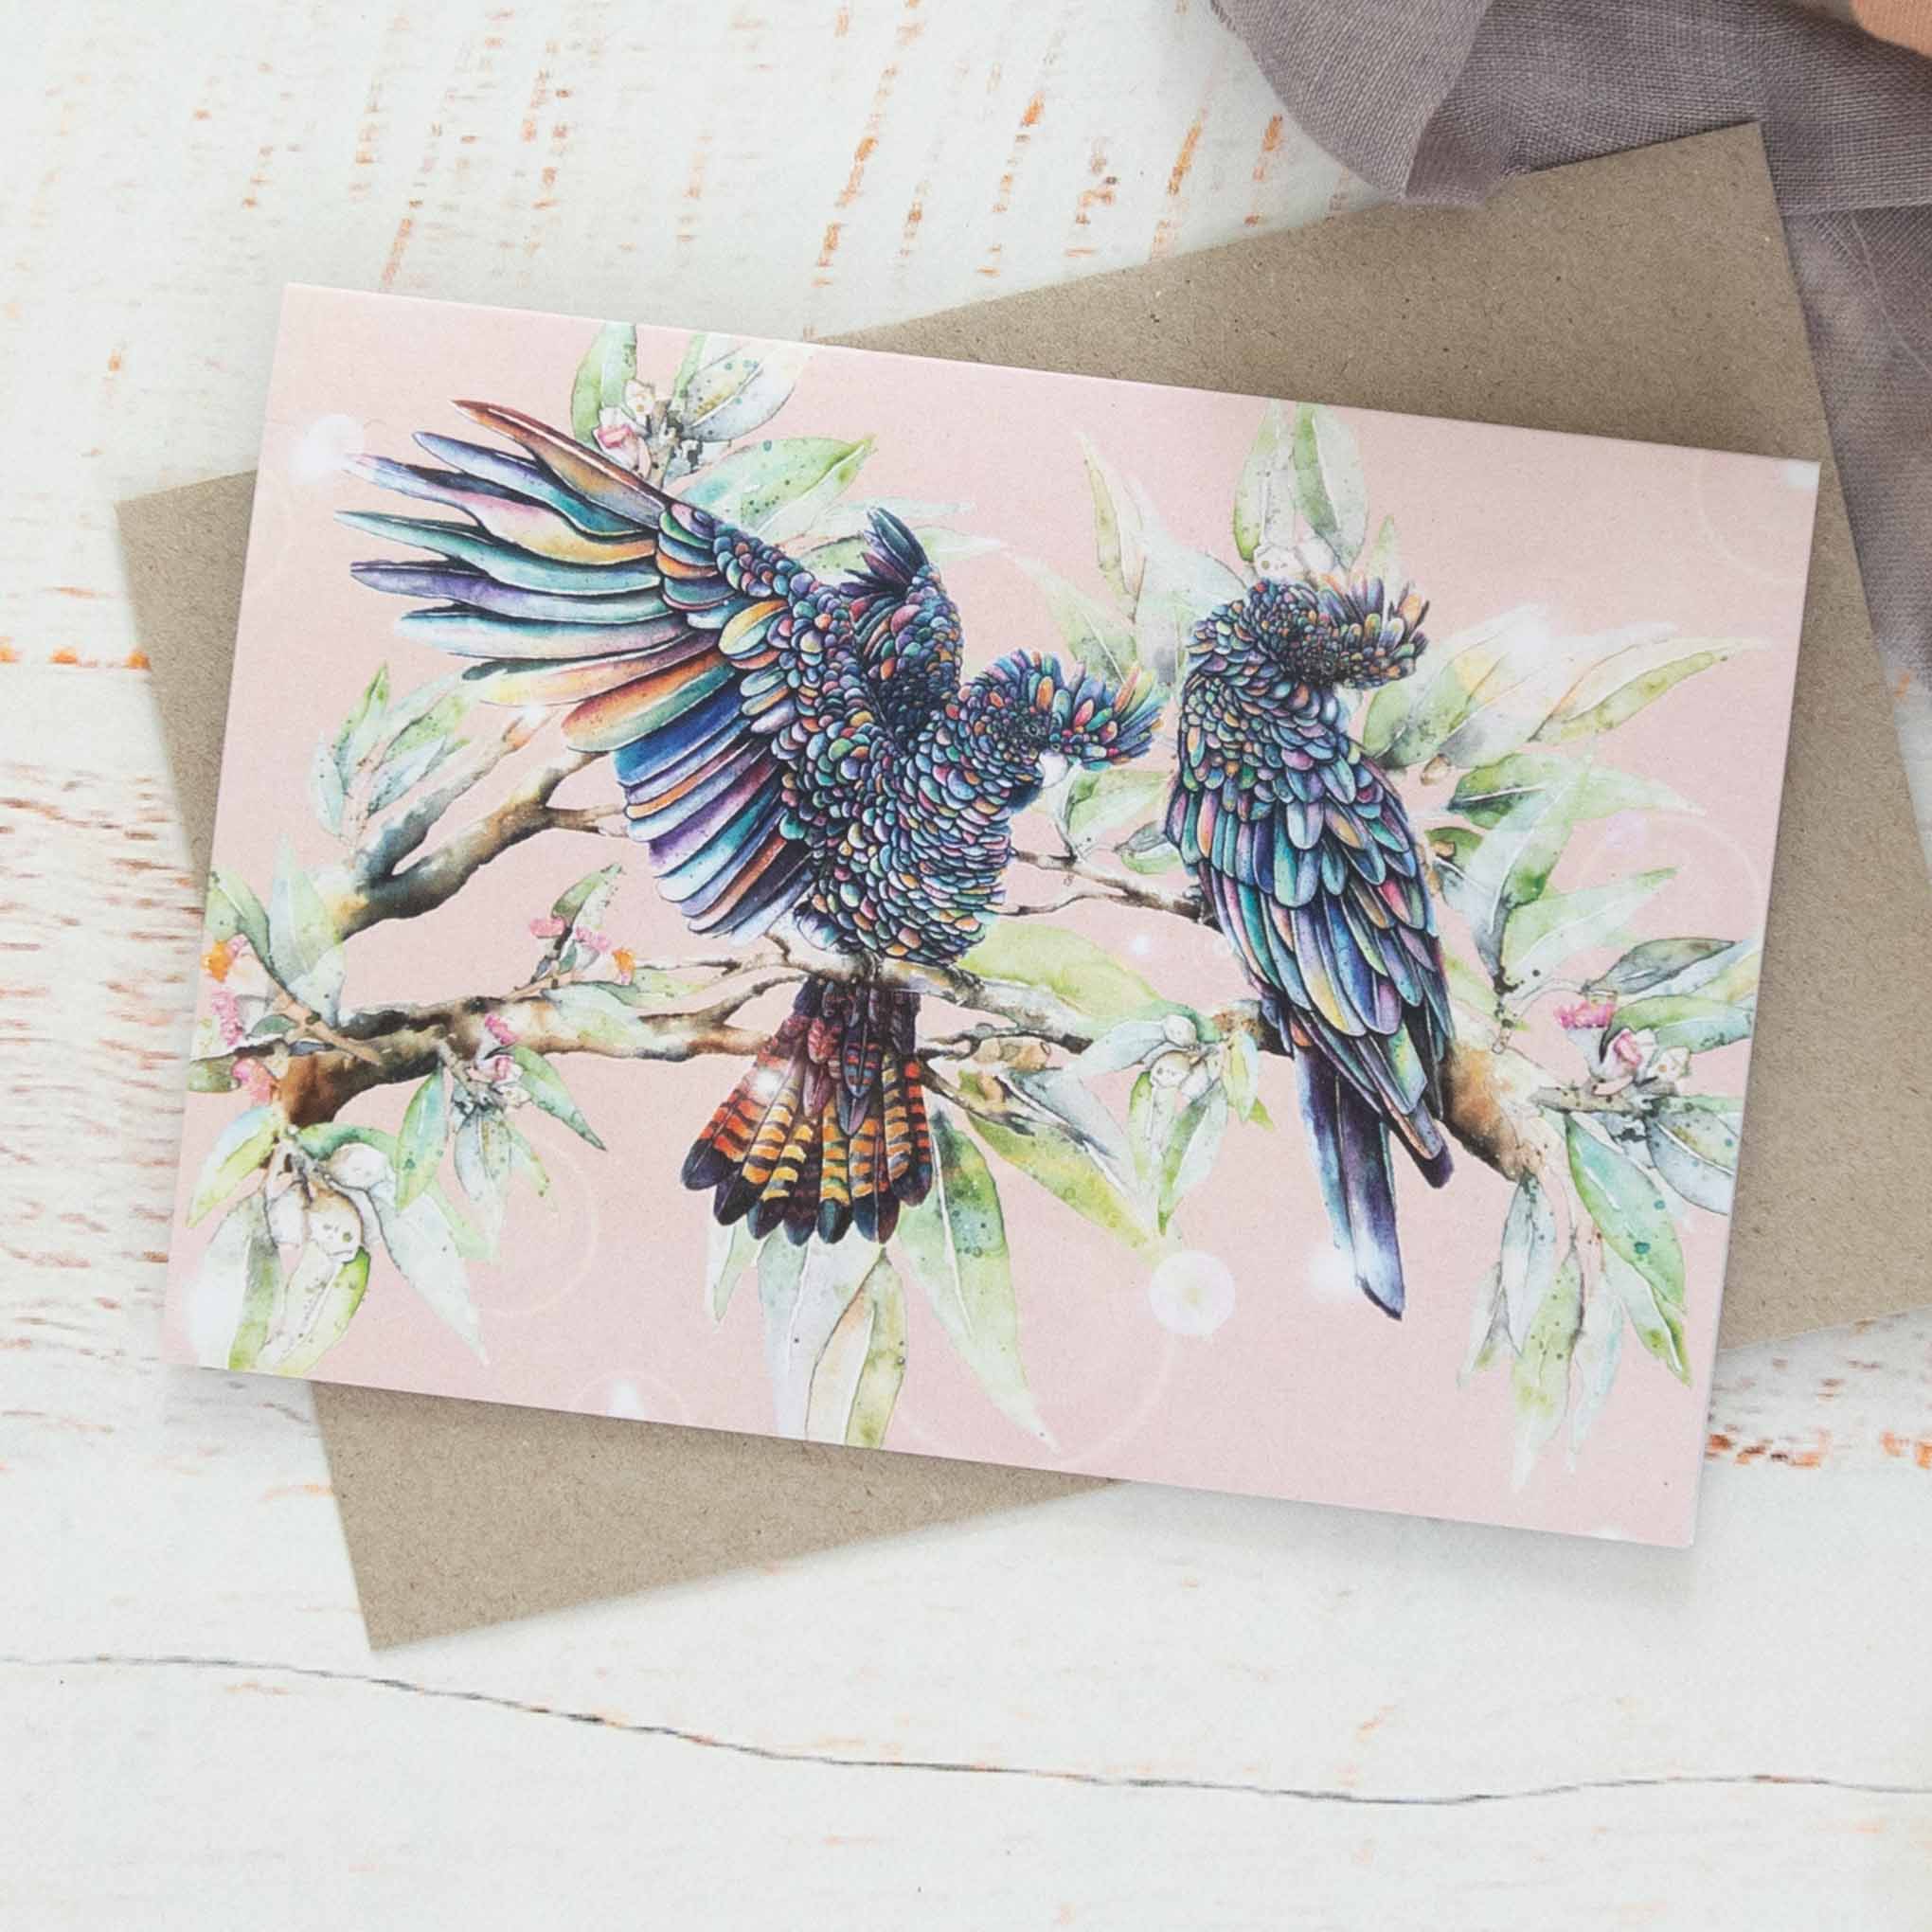 Black Cockatoos Greeting Card